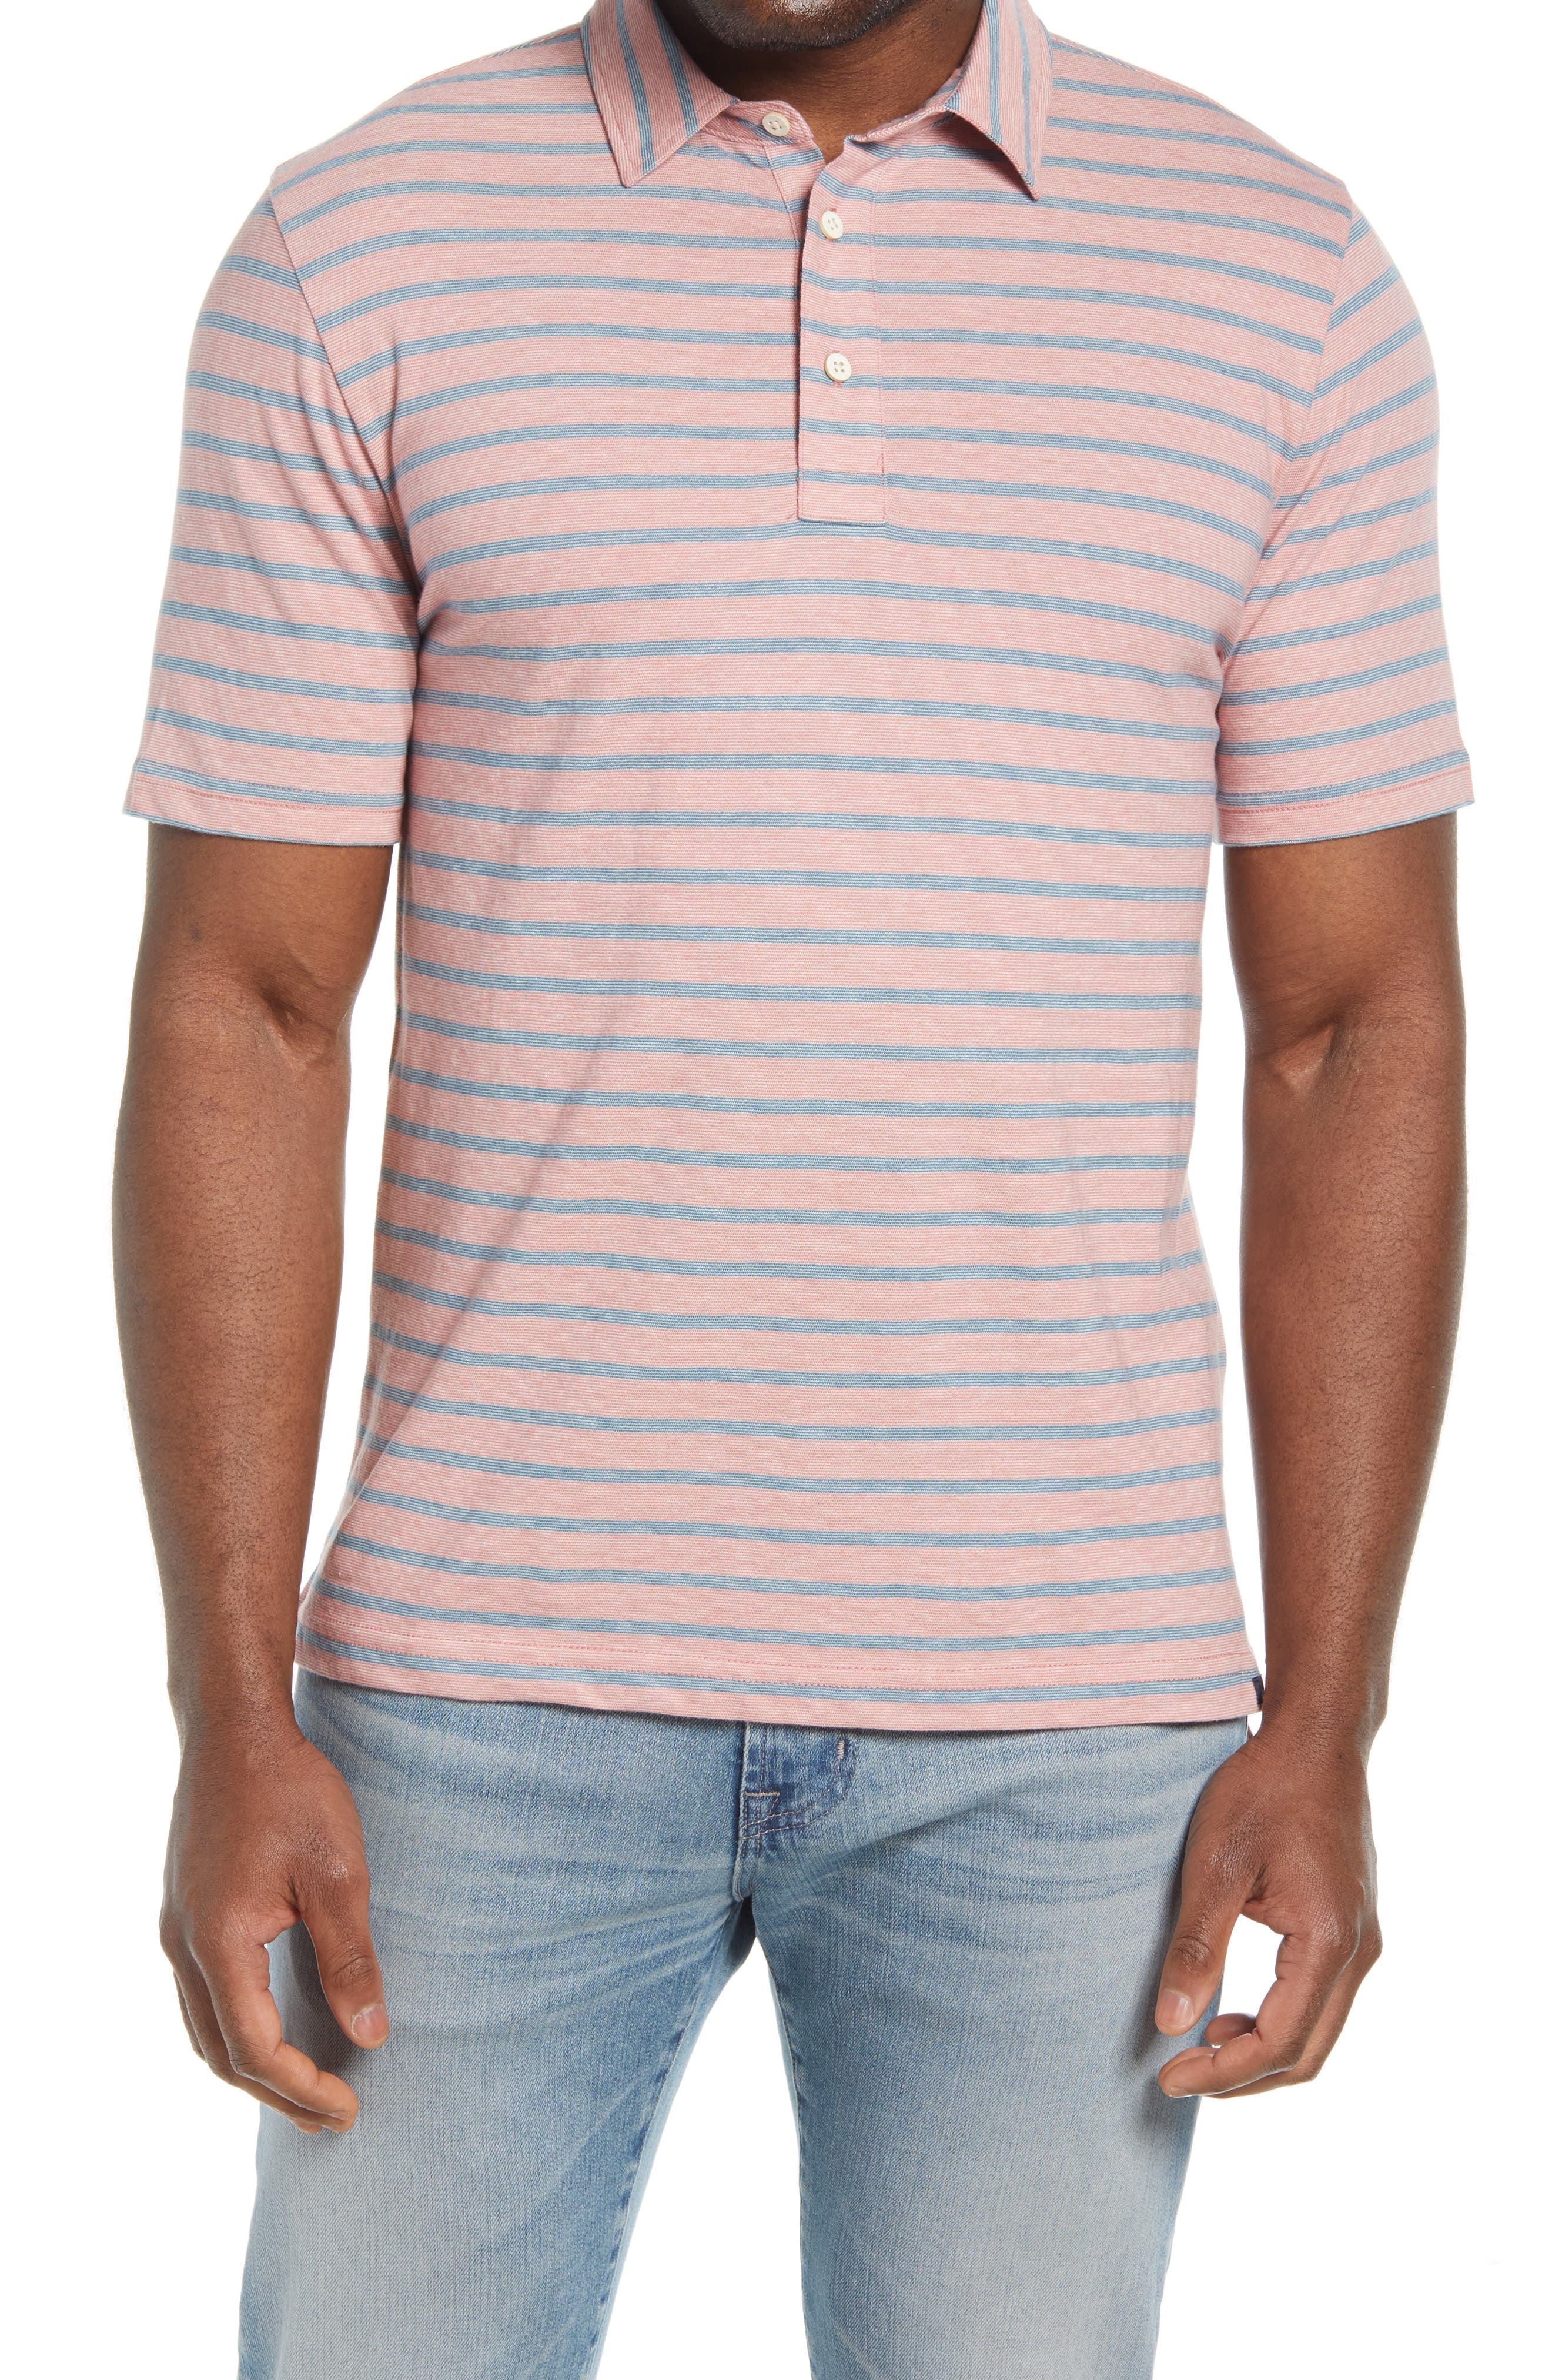 Mens Short Sleeve Polo T-Shirt Mountain Dew New Retro Pocket Fashion Assorted T-Shirt